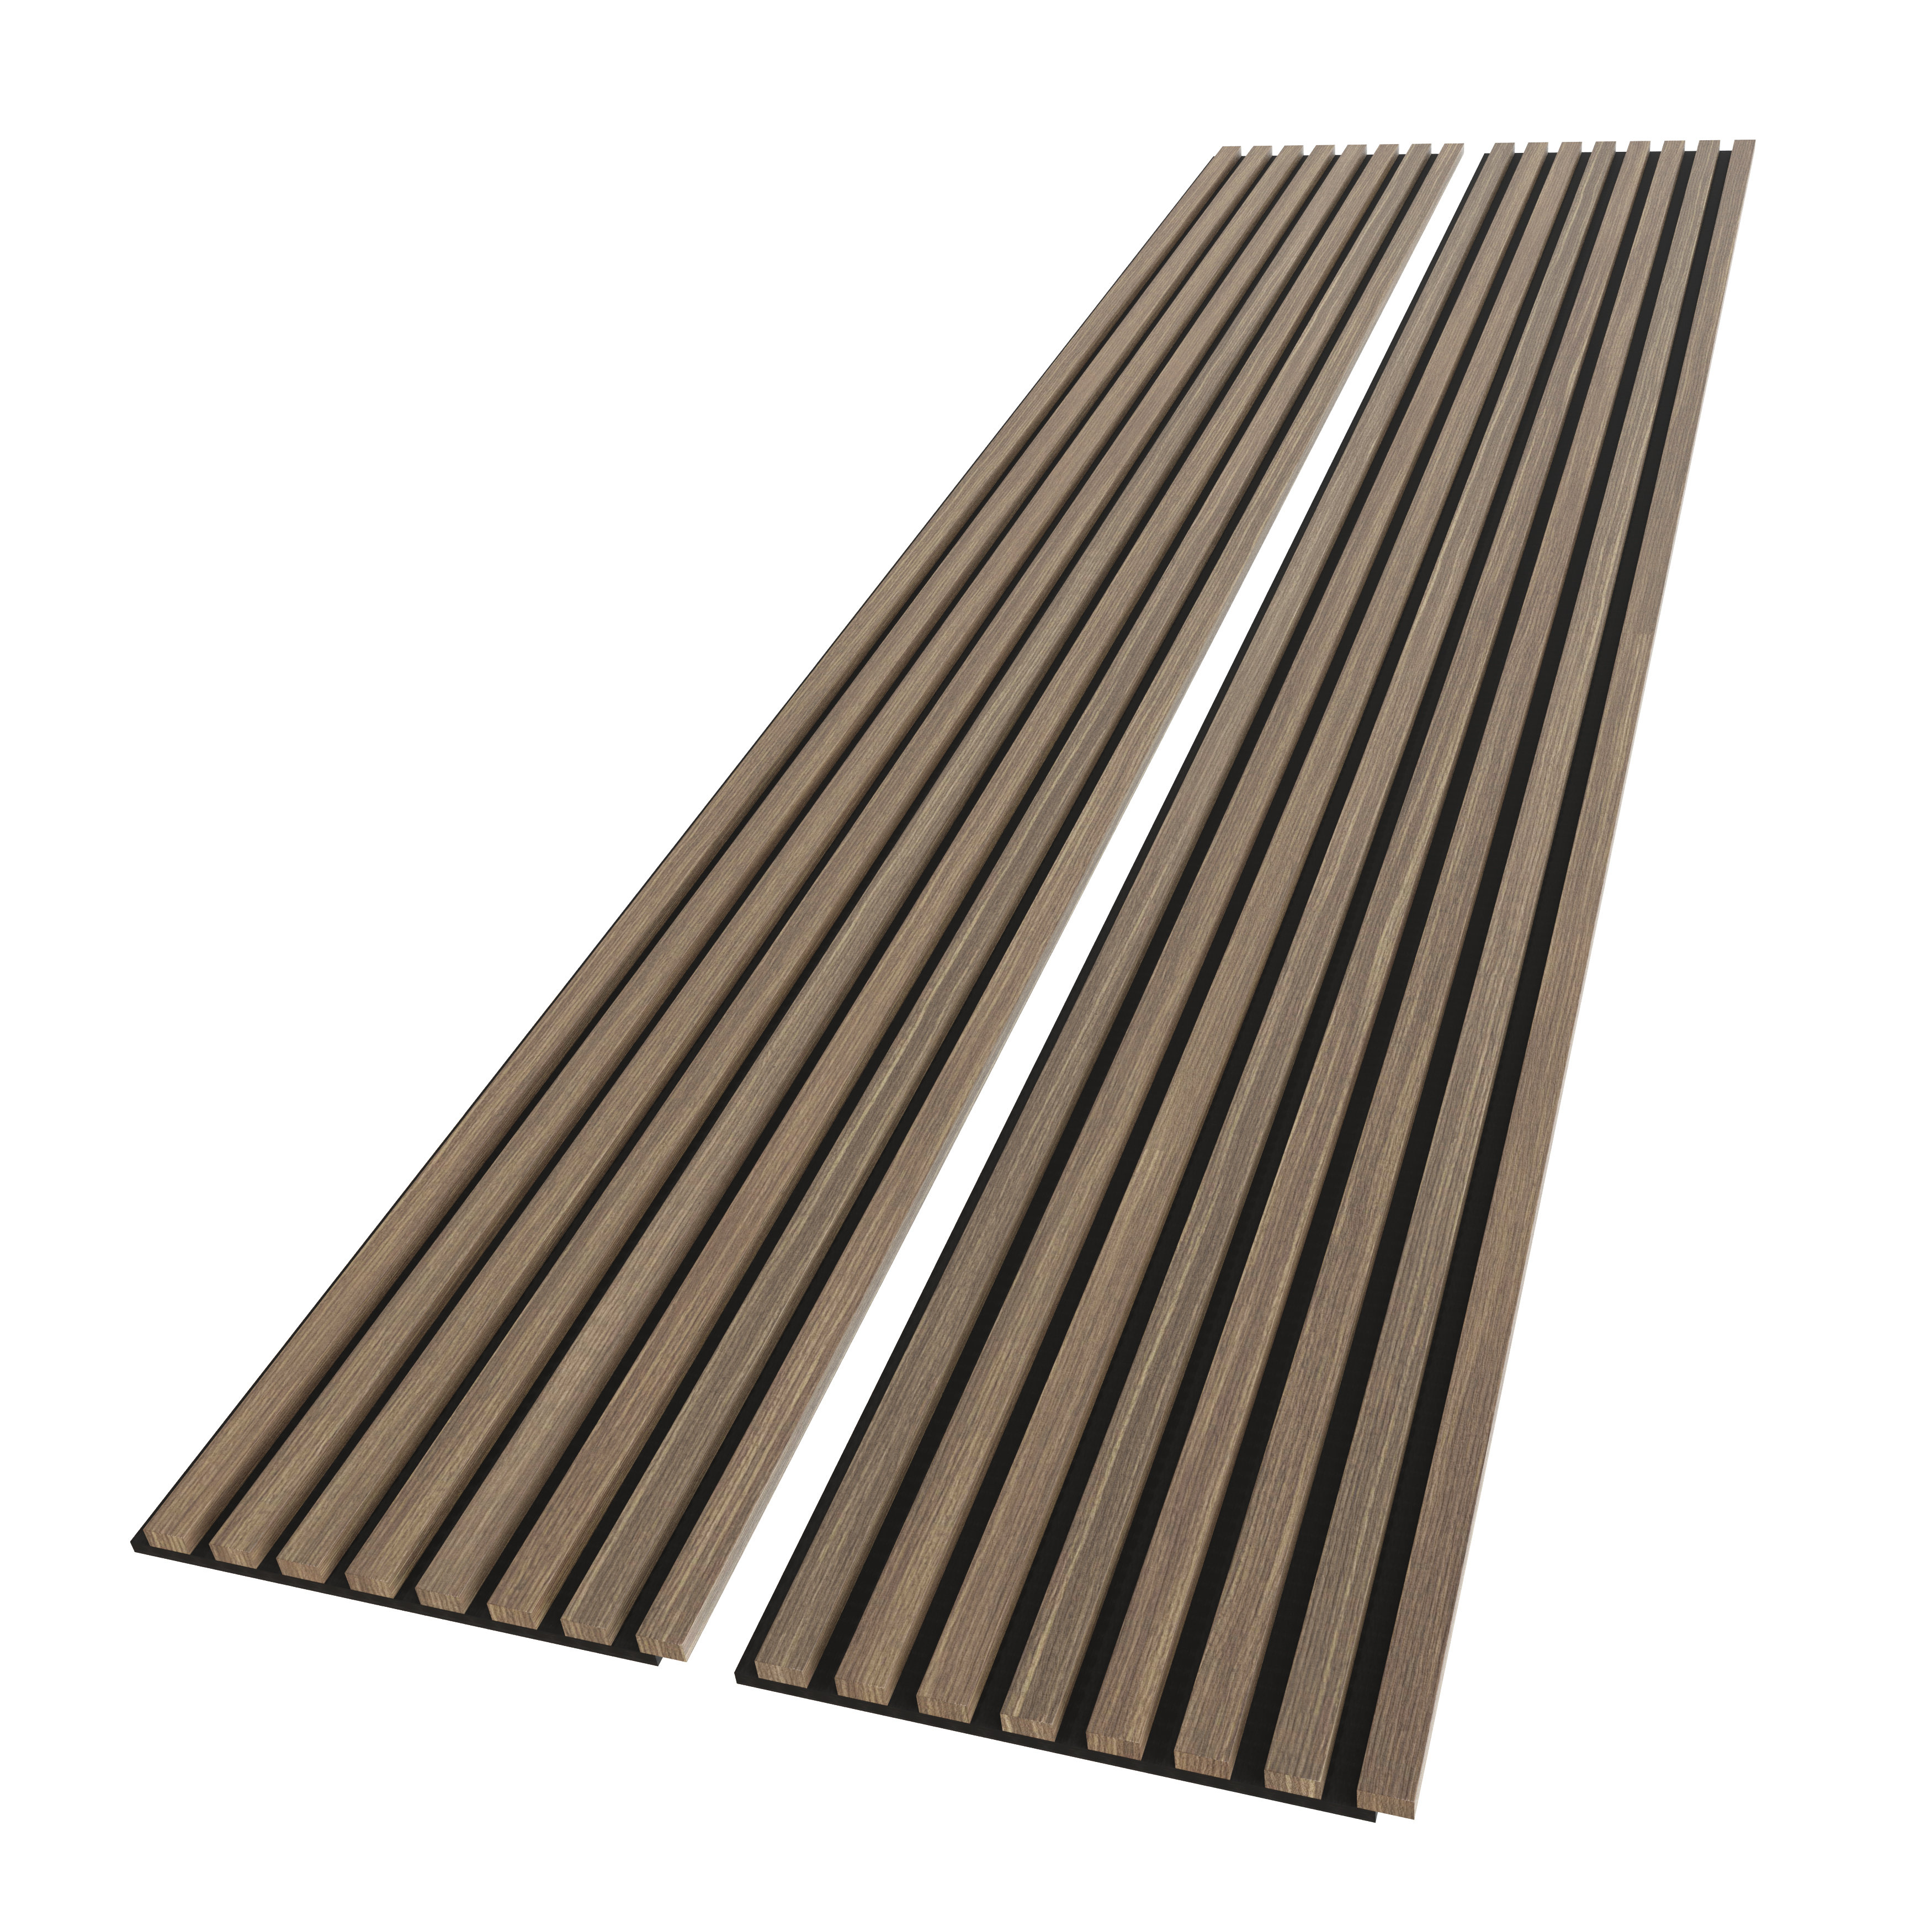 White Ash Grey Felt Solid Wood Slat Wall Panels - For Sale, Buy Online